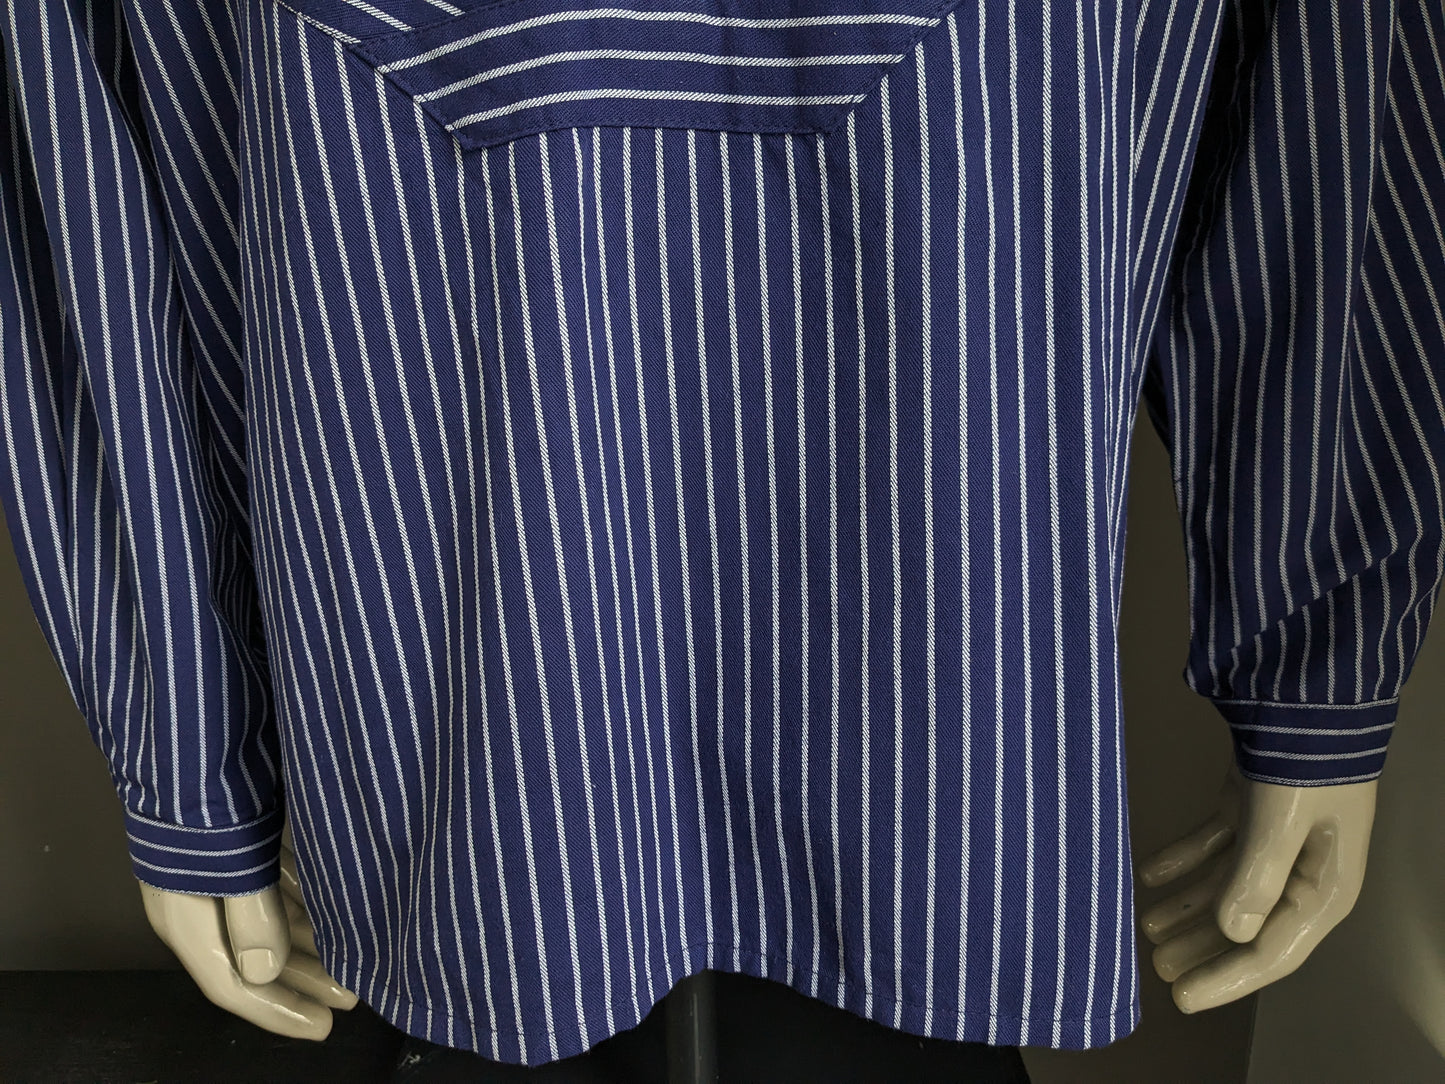 Vintage Duster polo trui / overhemd met opstaande / farmers / Mao kraag. Blauw wit gestreept. Maat XXL / 2XL